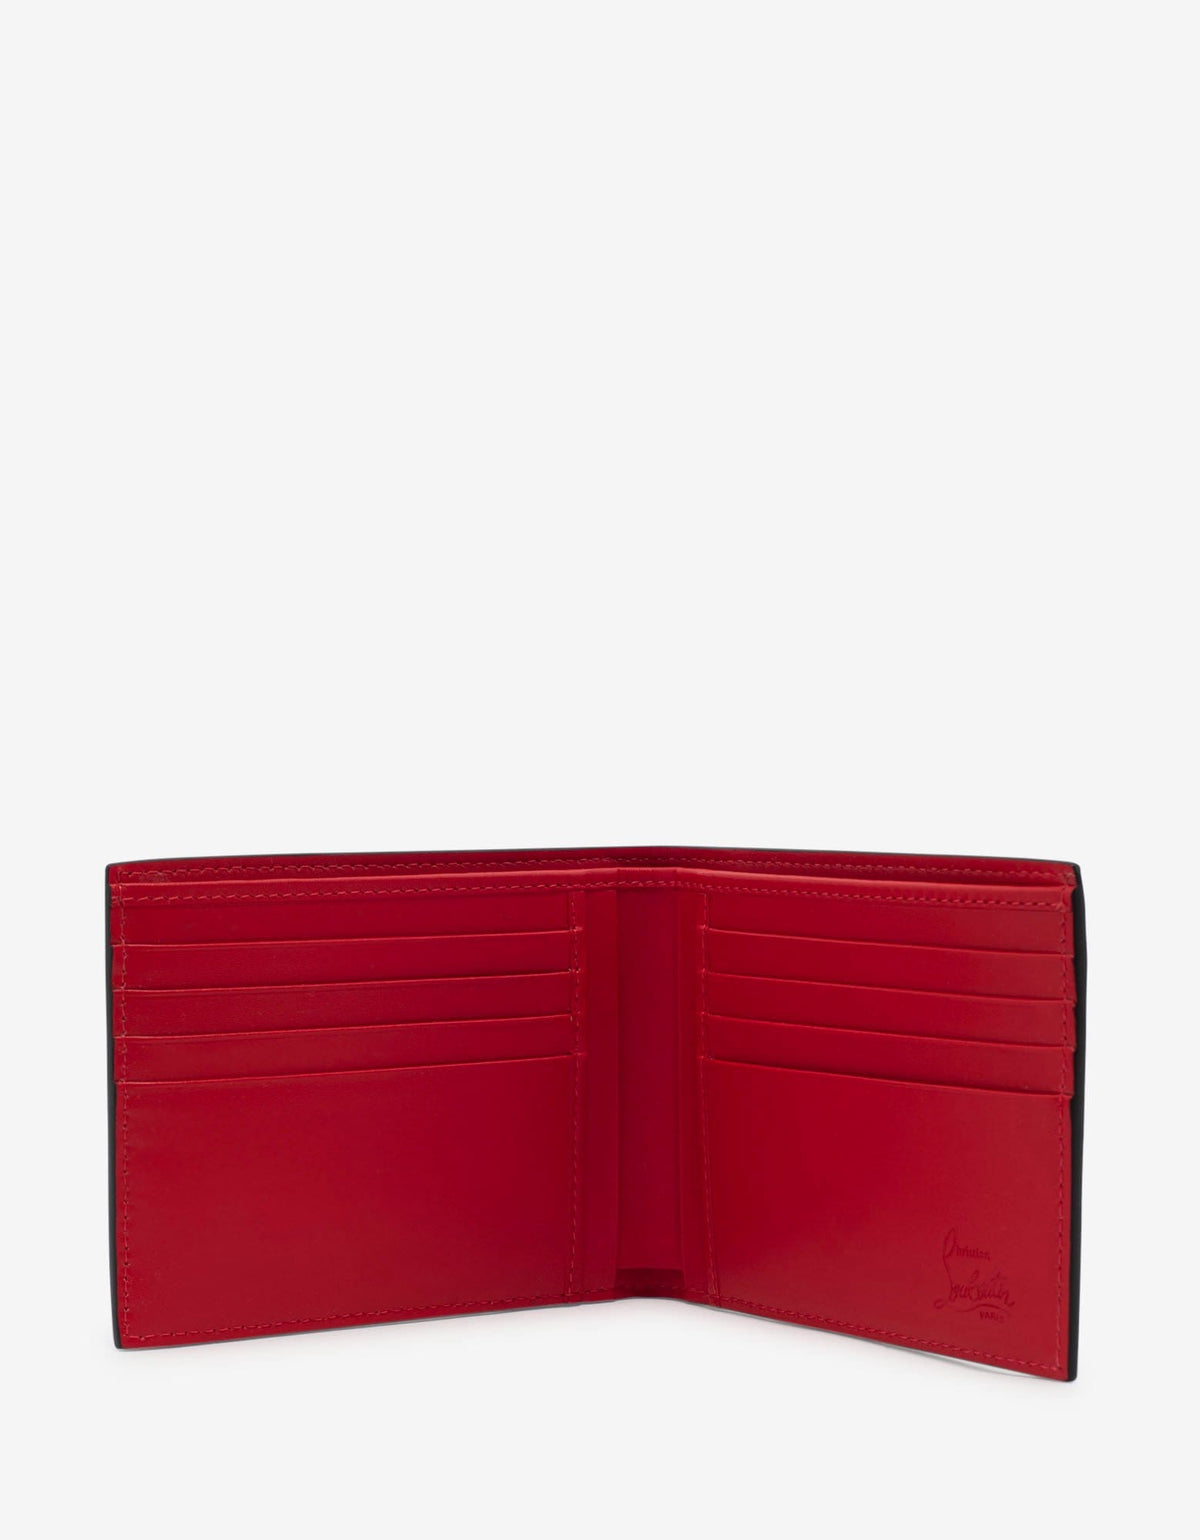 Christian Louboutin - Coolcard Sneakers Sole Black & Red Billfold Wallet -